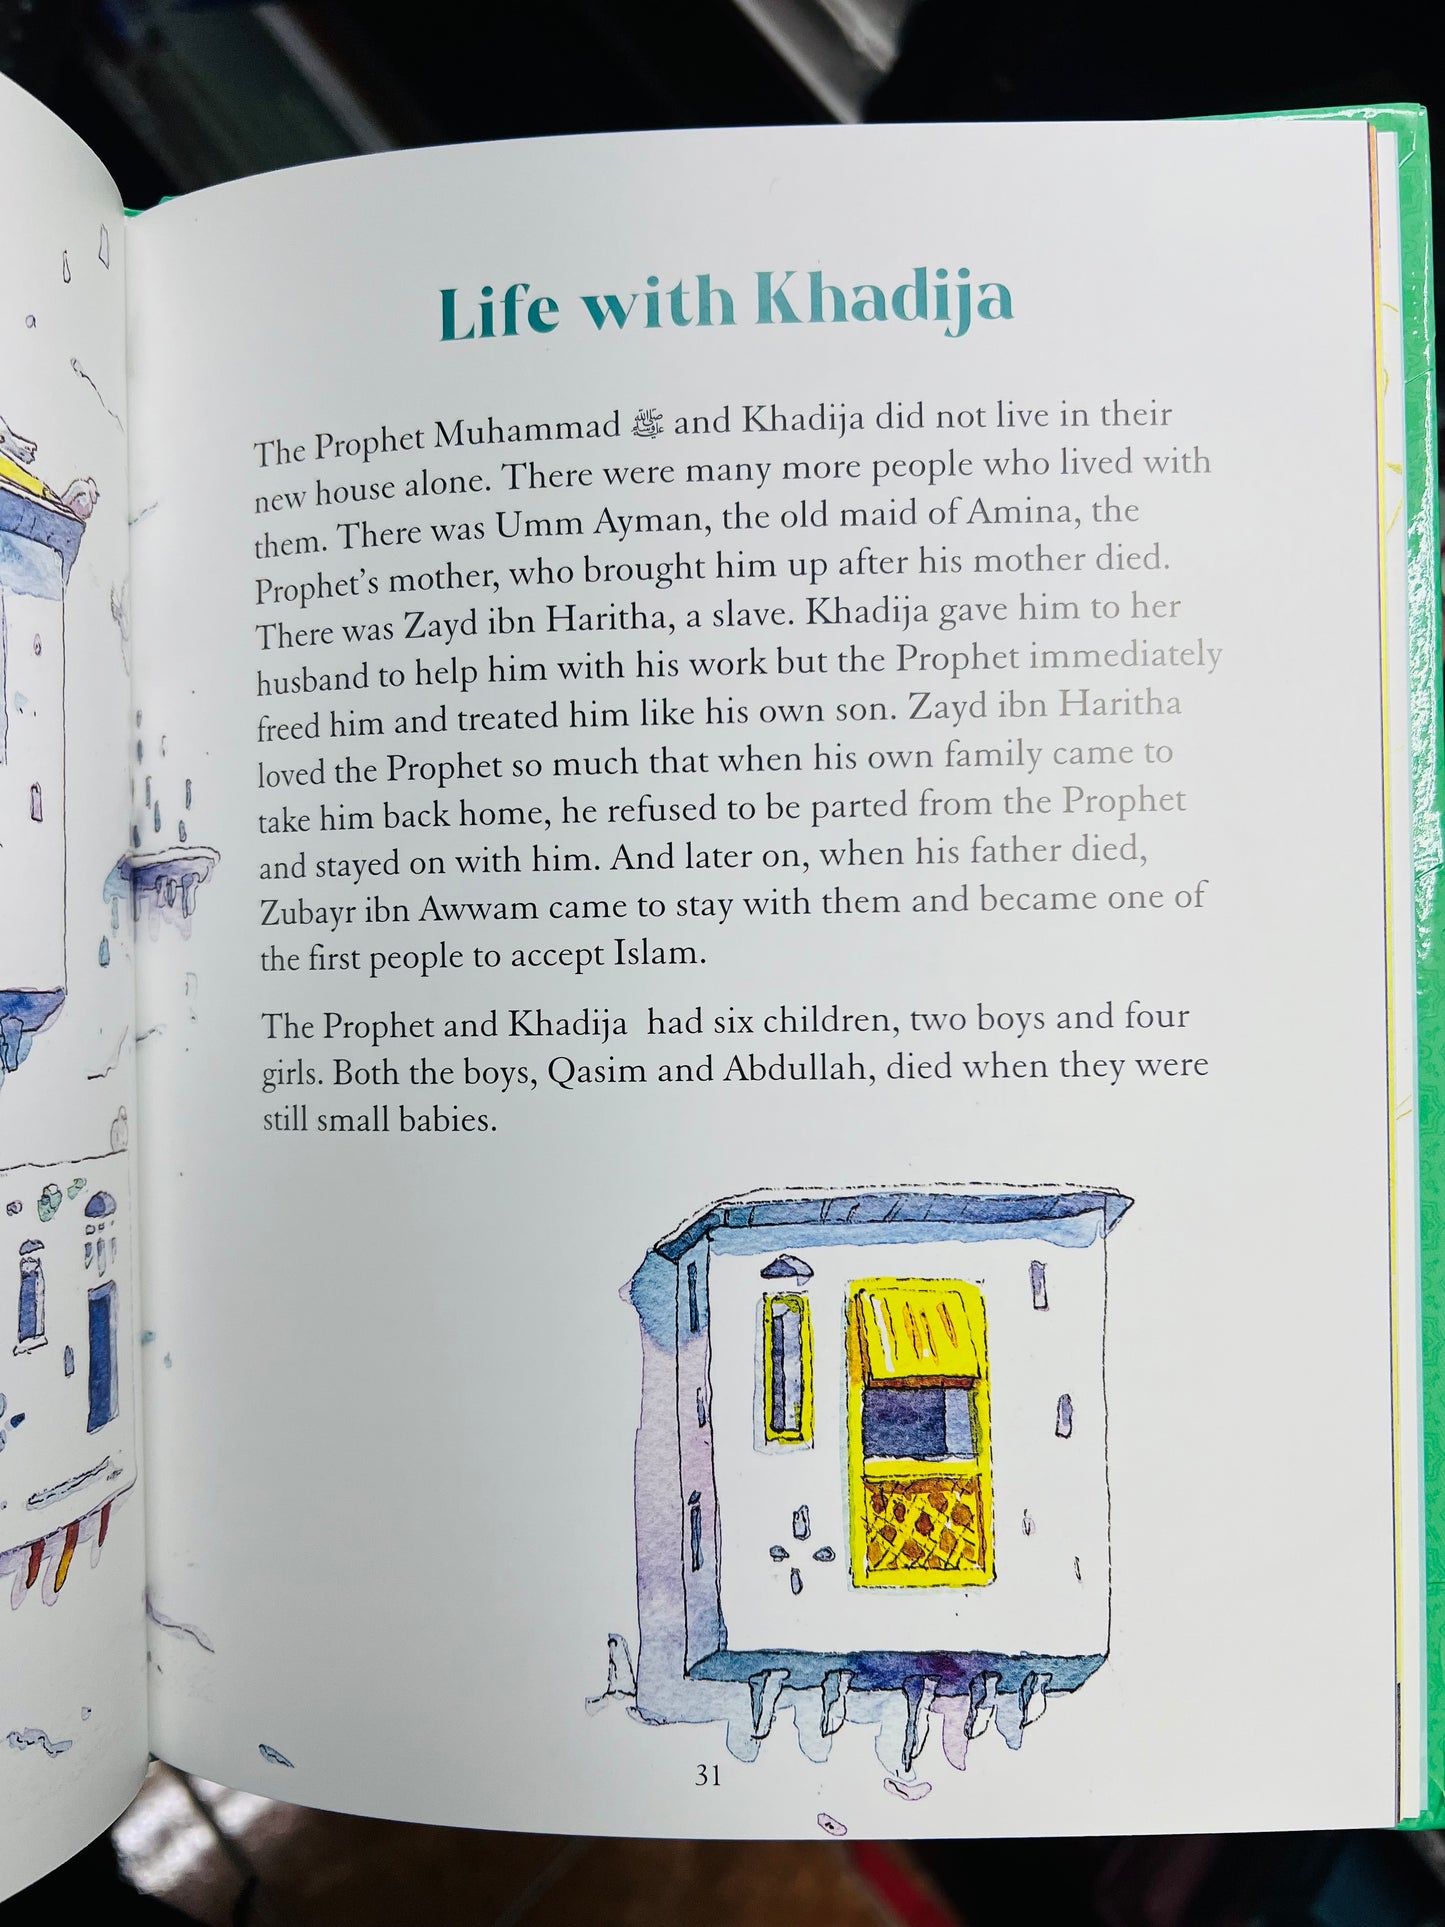 The Story of Khadijah (Hardback)